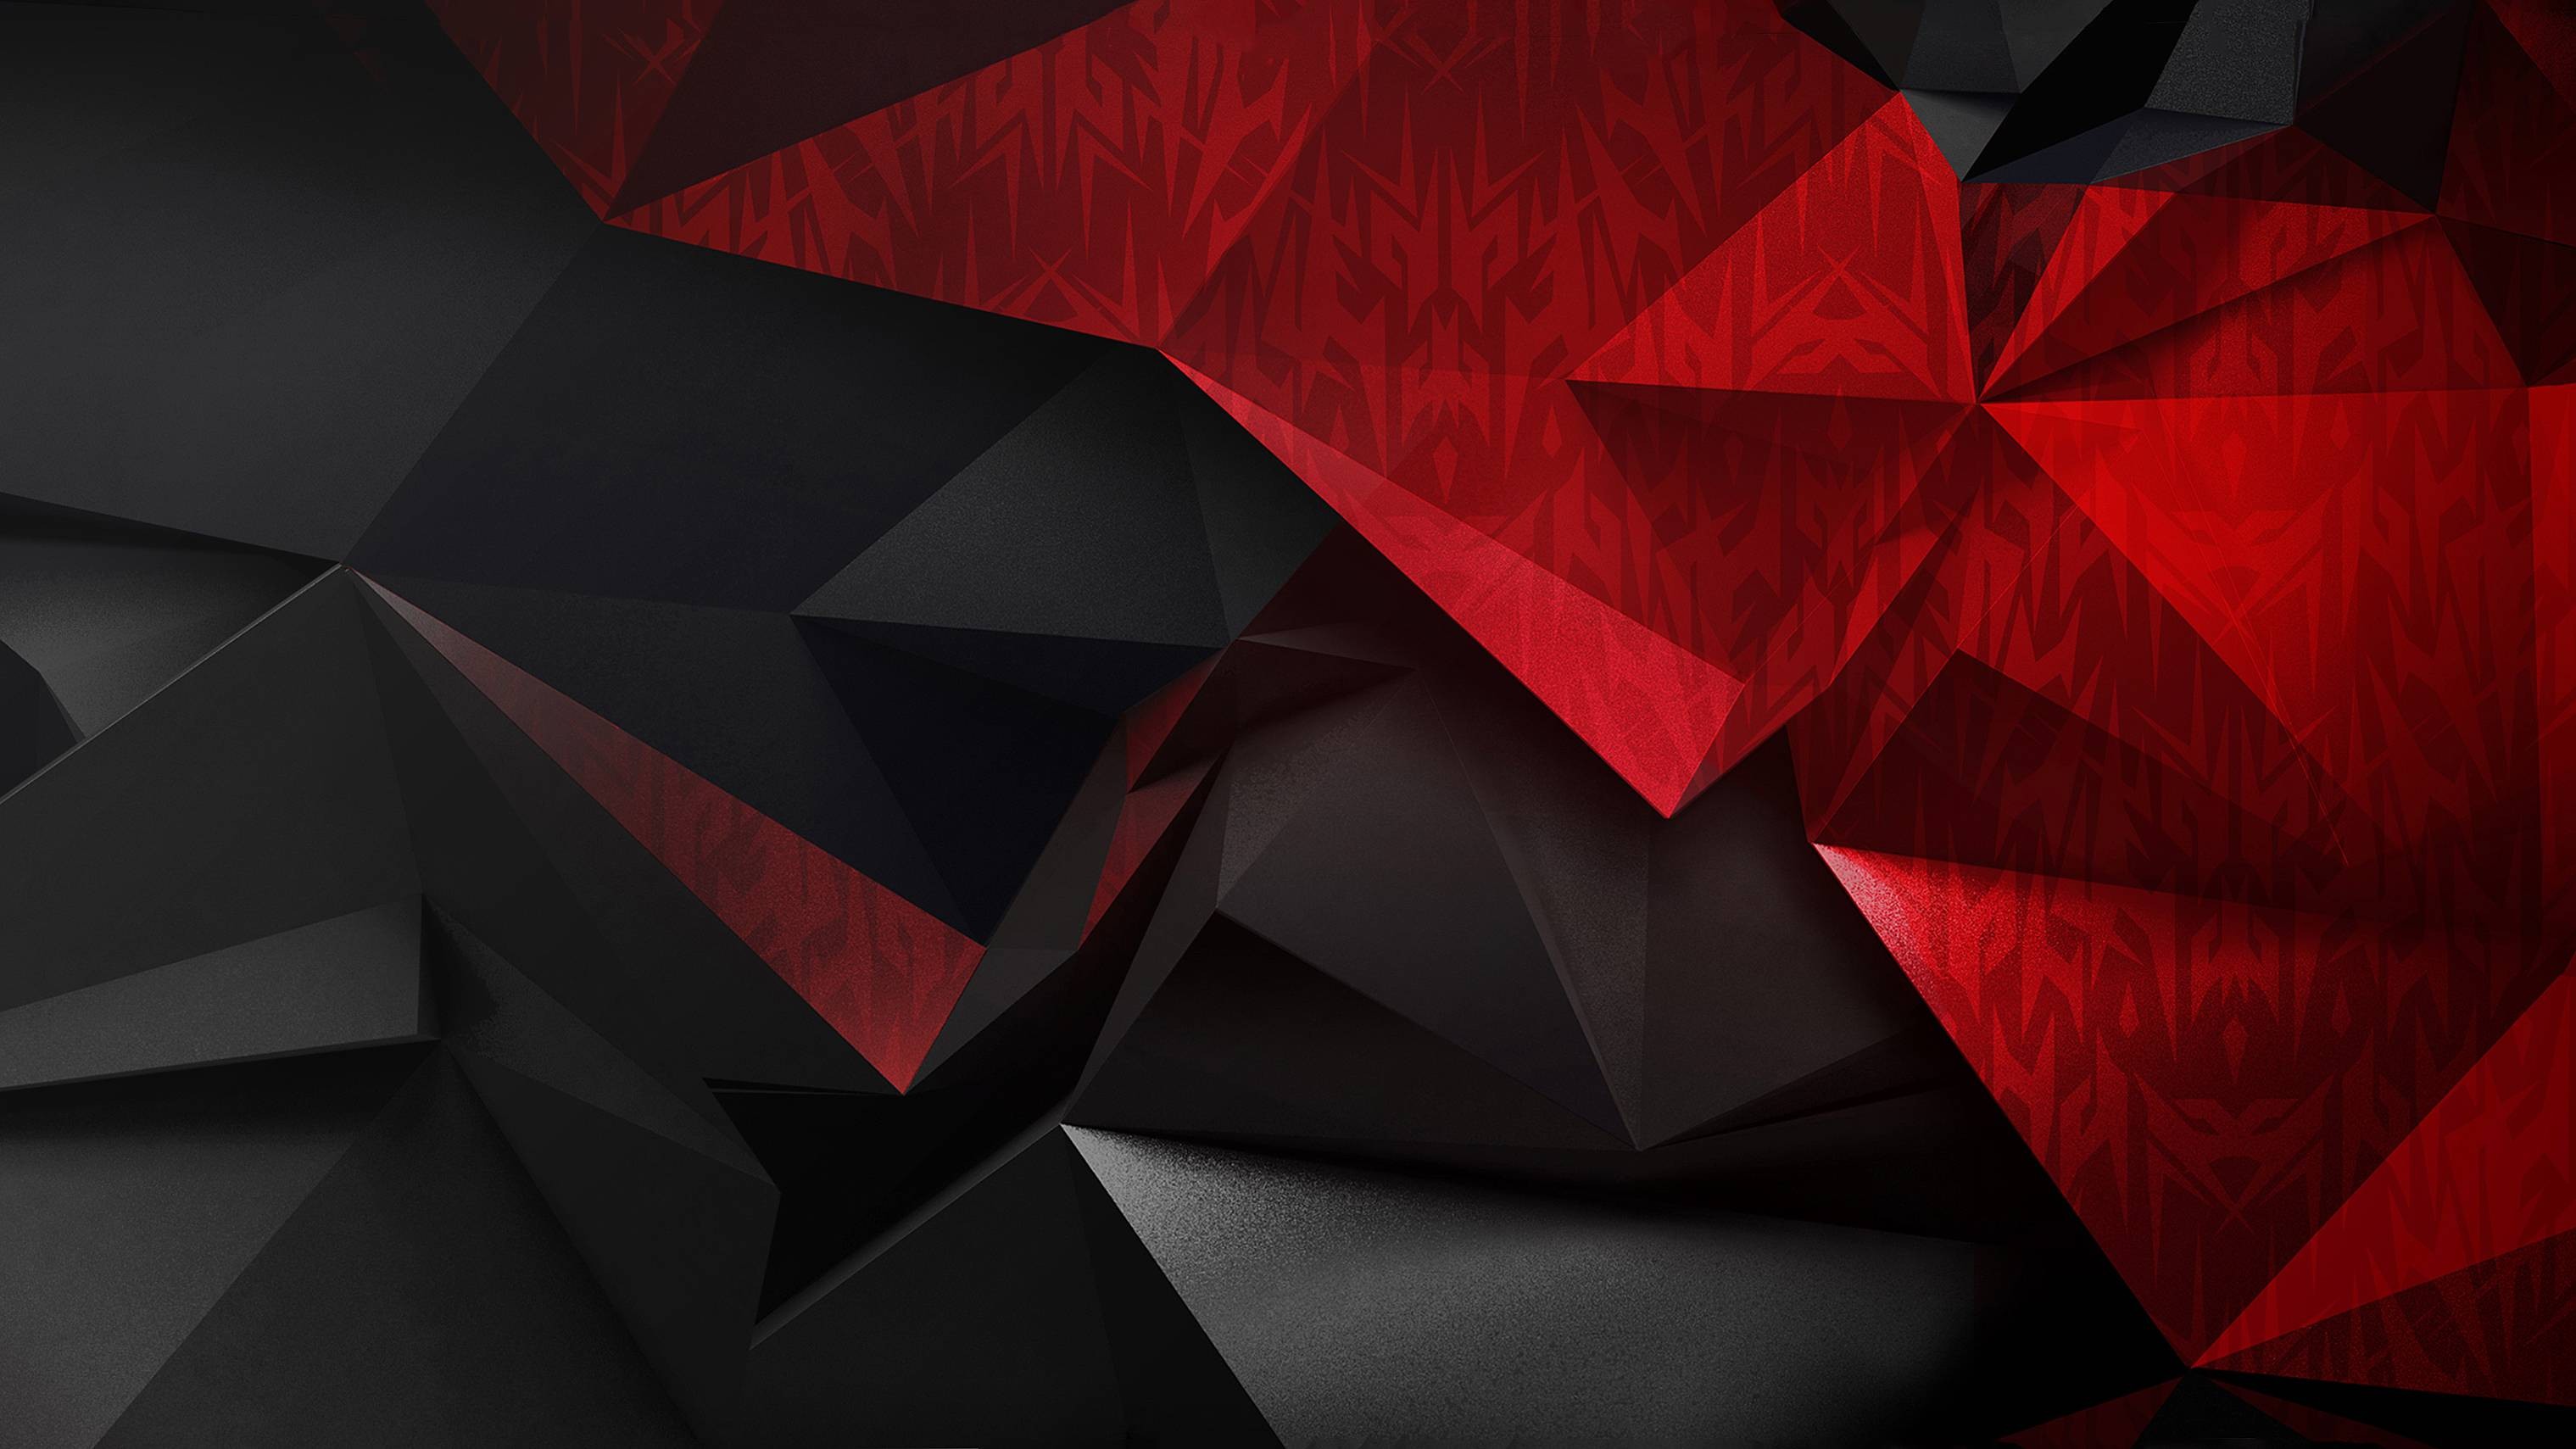 General 3038x1709 low poly texture red black DeviantArt abstract digital art CGI